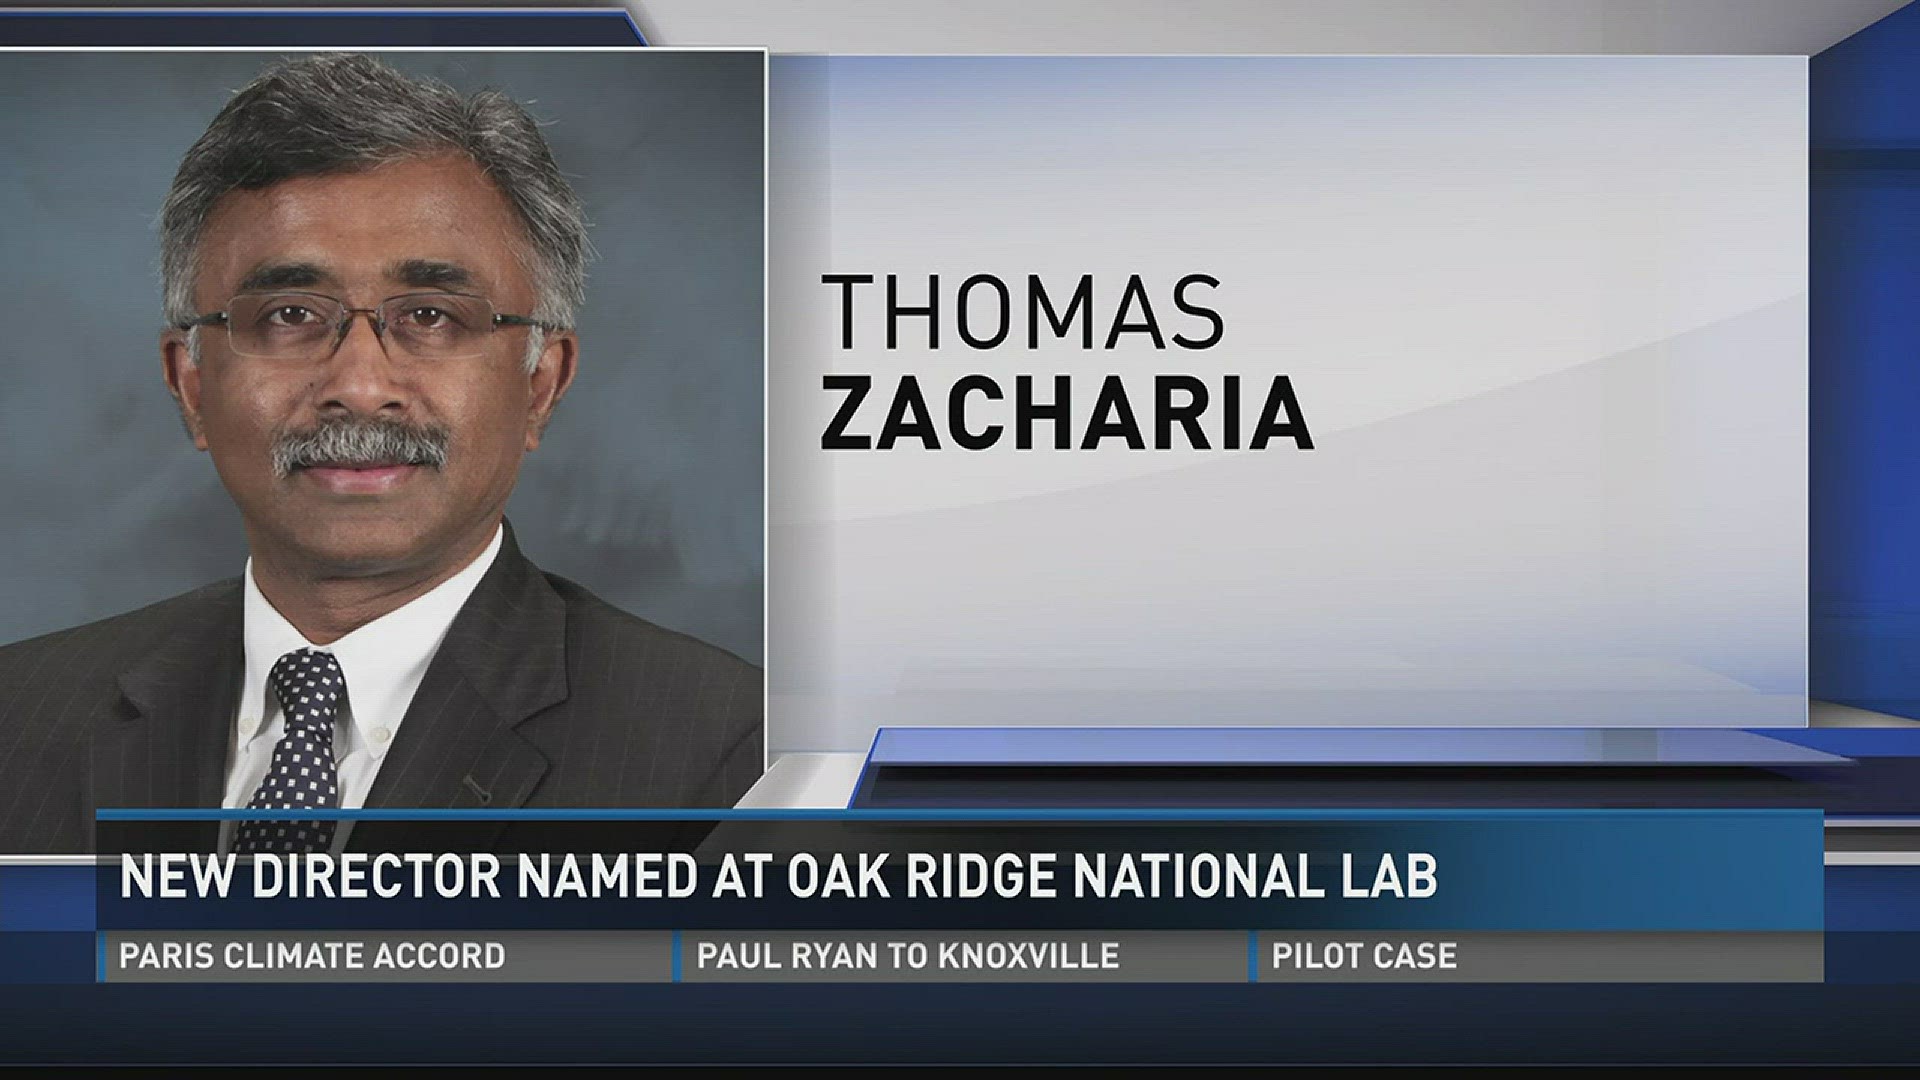 June 1, 2017: Thomas Zacharia has been named the new director of Oak Ridge National Laboratory.